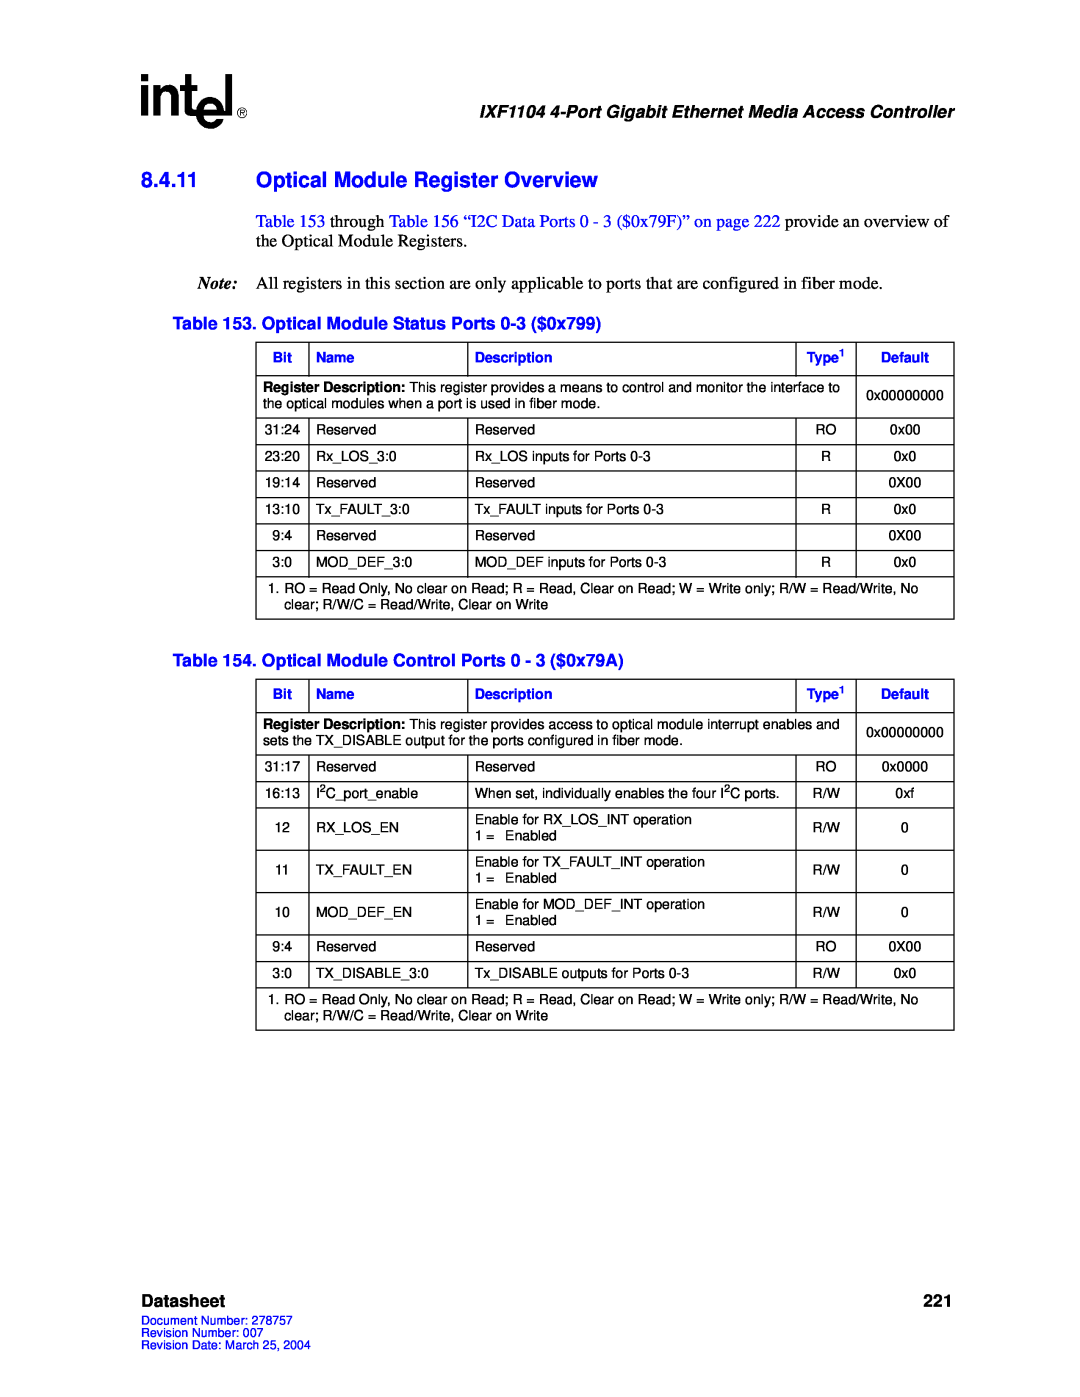 Intel IXF1104 manual 8.4.11Optical Module Register Overview, Datasheet 